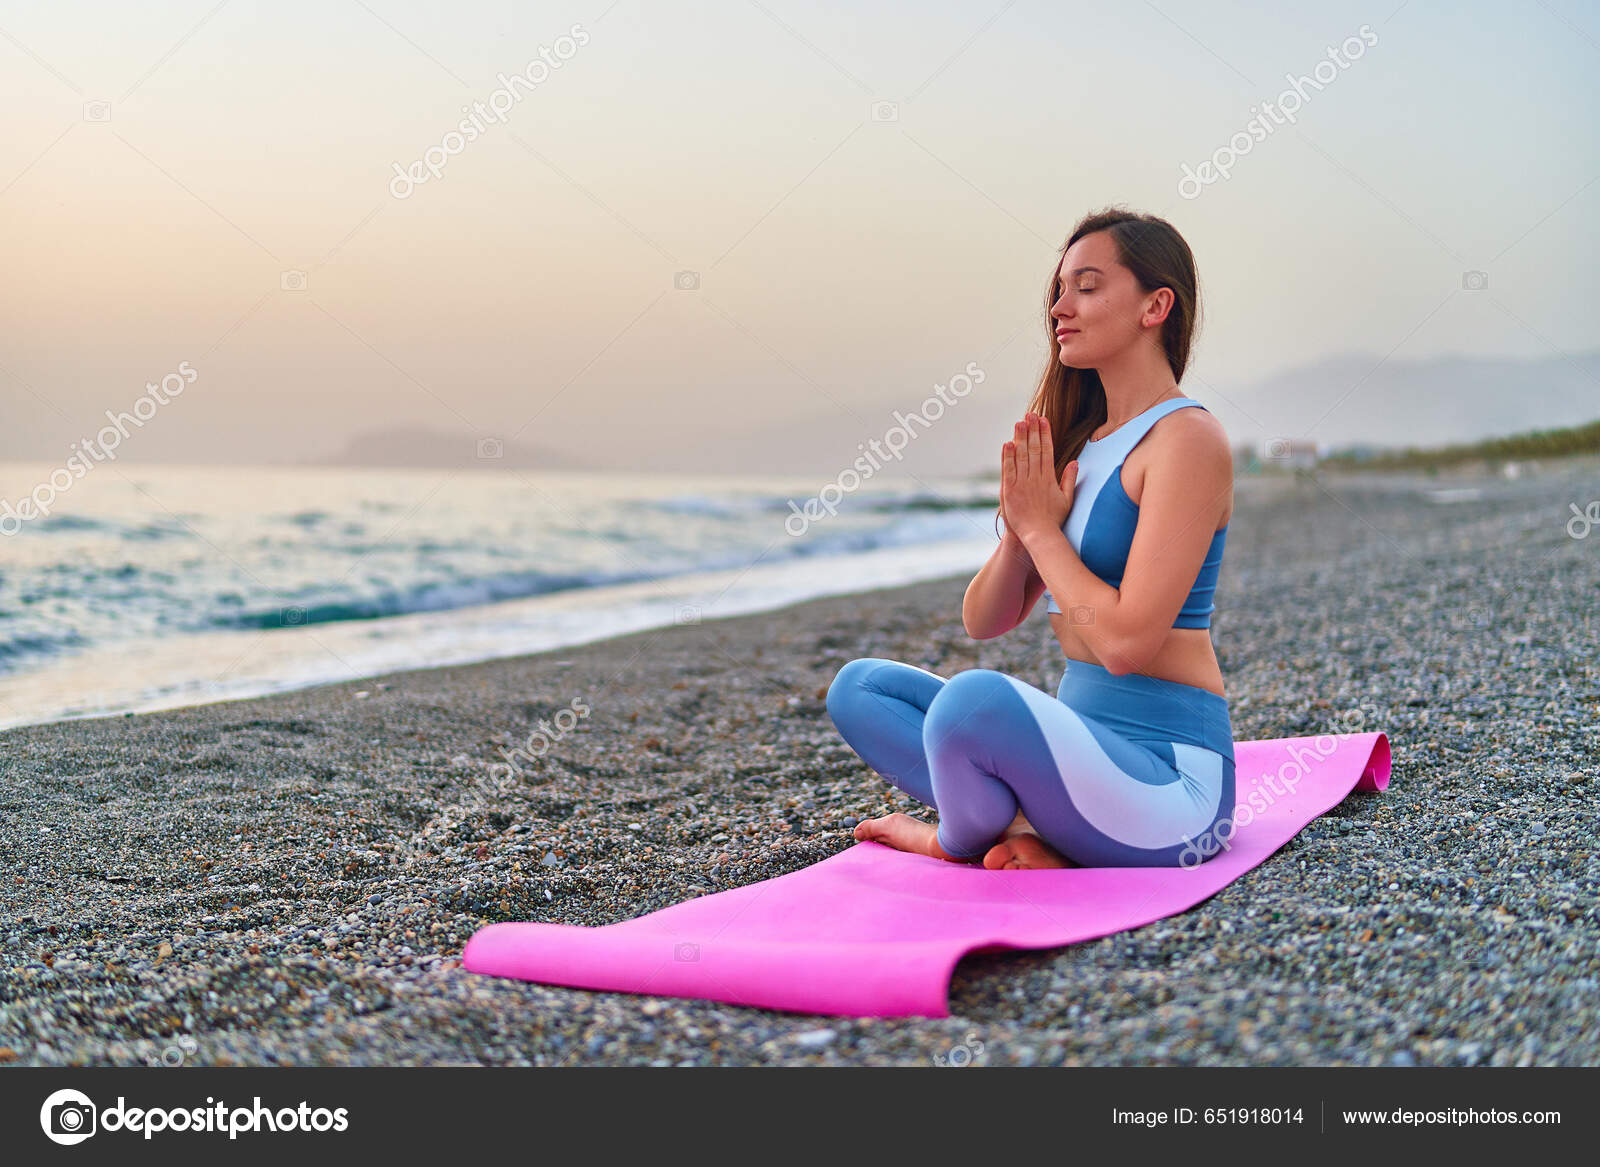 Calm Serene Bliss Satisfied Fitness Woman Doing Yoga Meditation